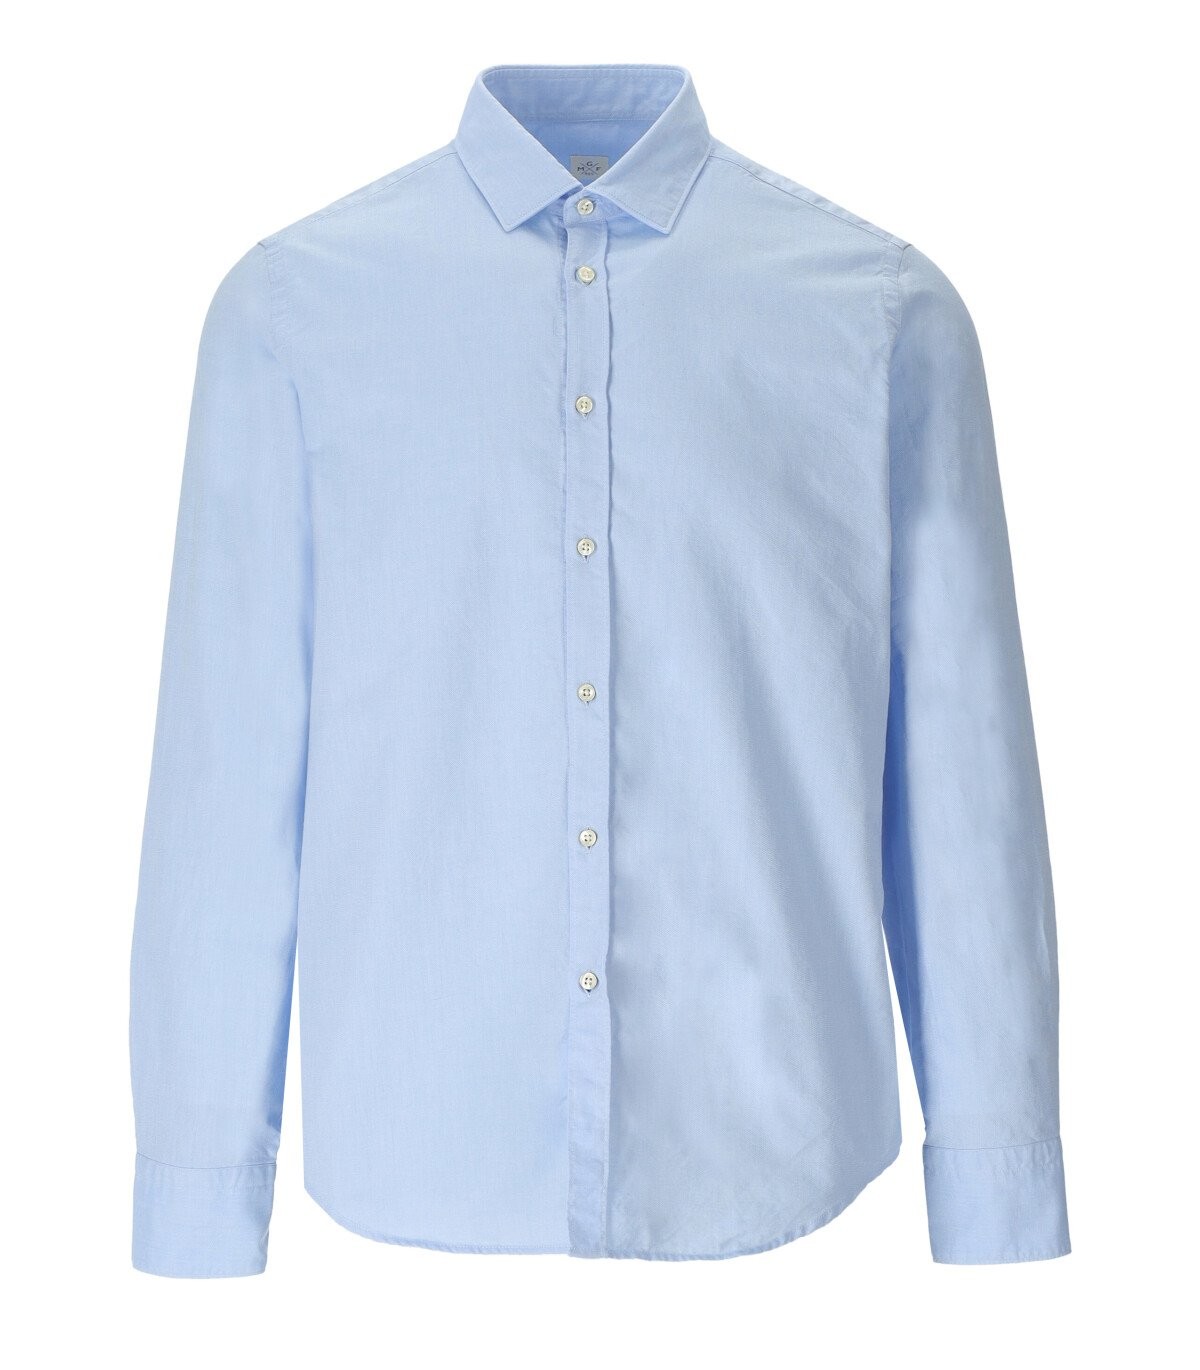 Gmf 965 Cotton Pique Light Blue Shirt